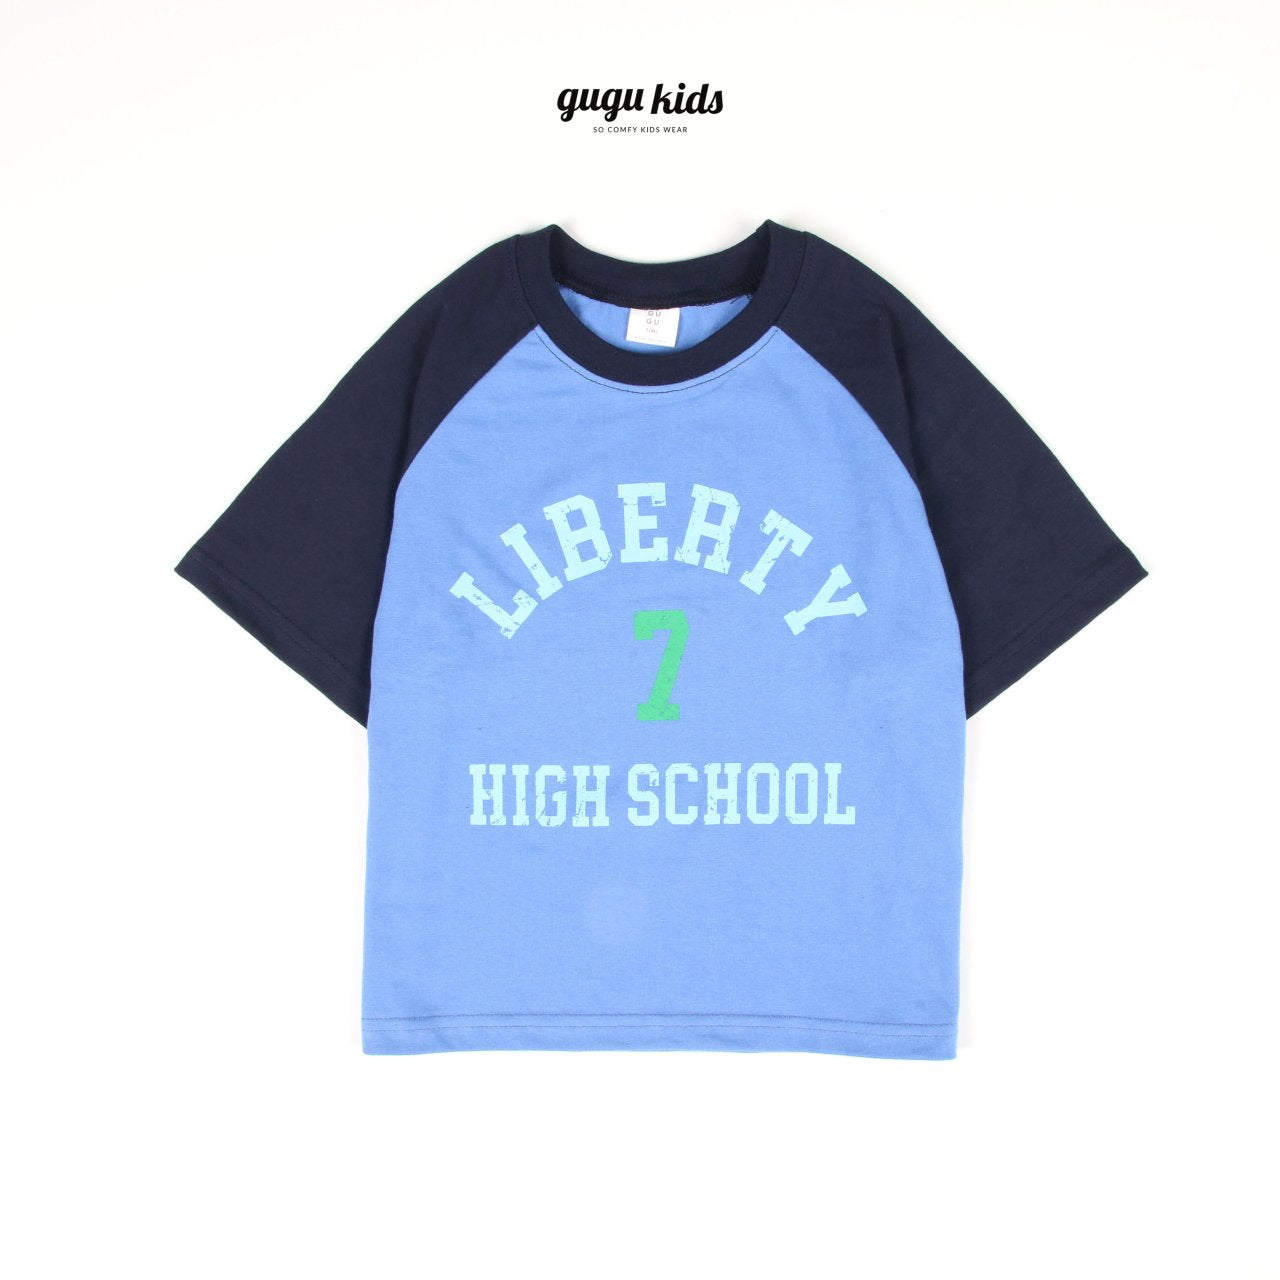 [Gugu Kids] Liberty Top Bottom Set